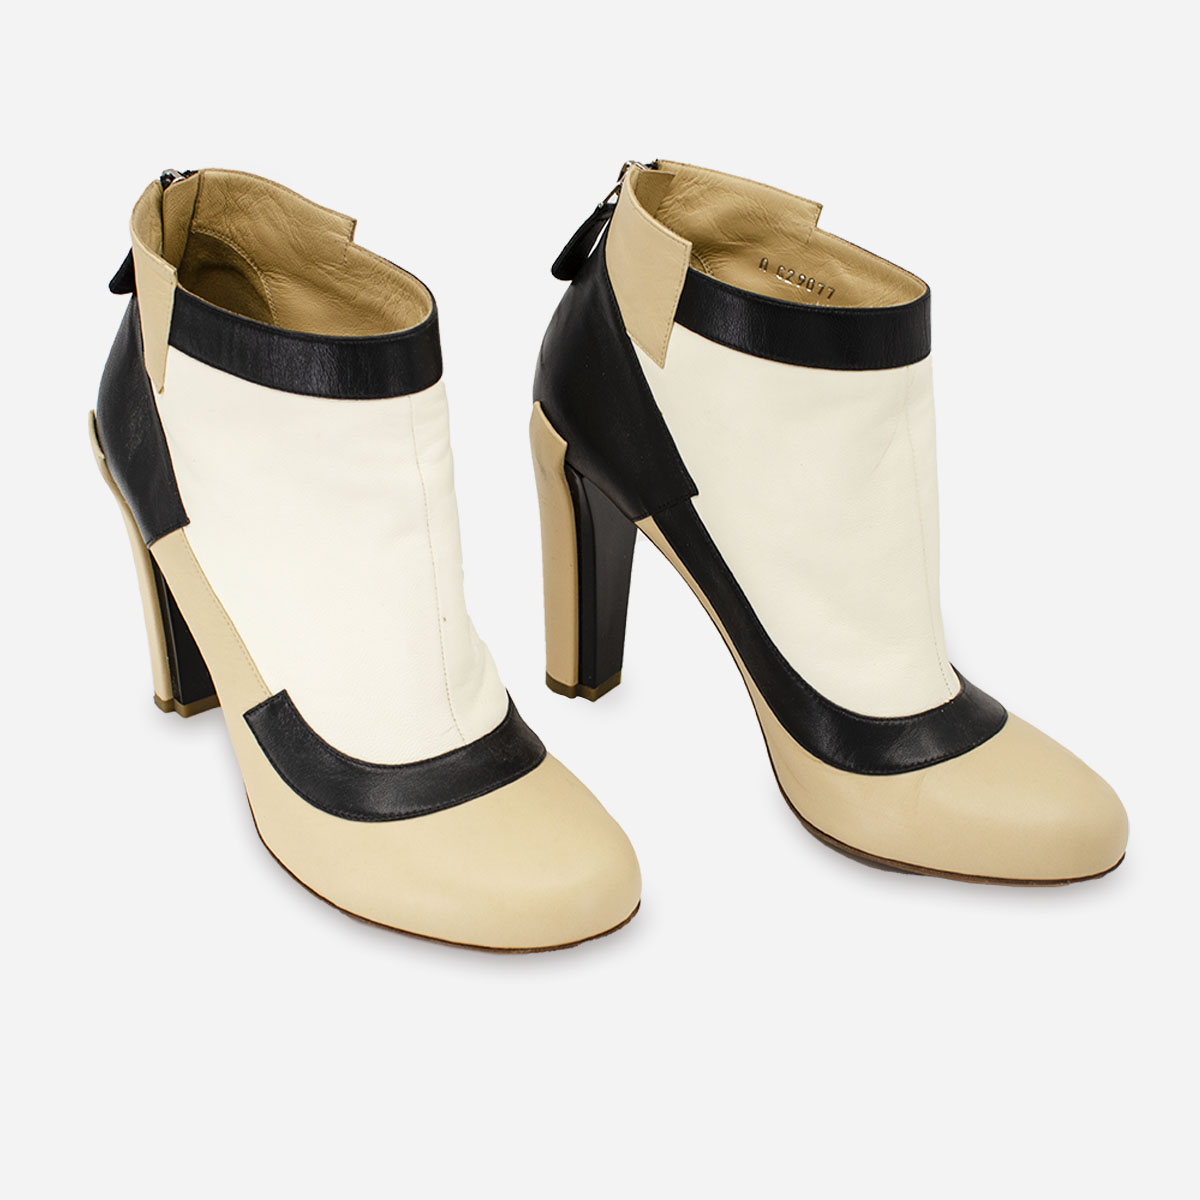 Chanel Ankle Boots, 4 Heels, Italian Size 40